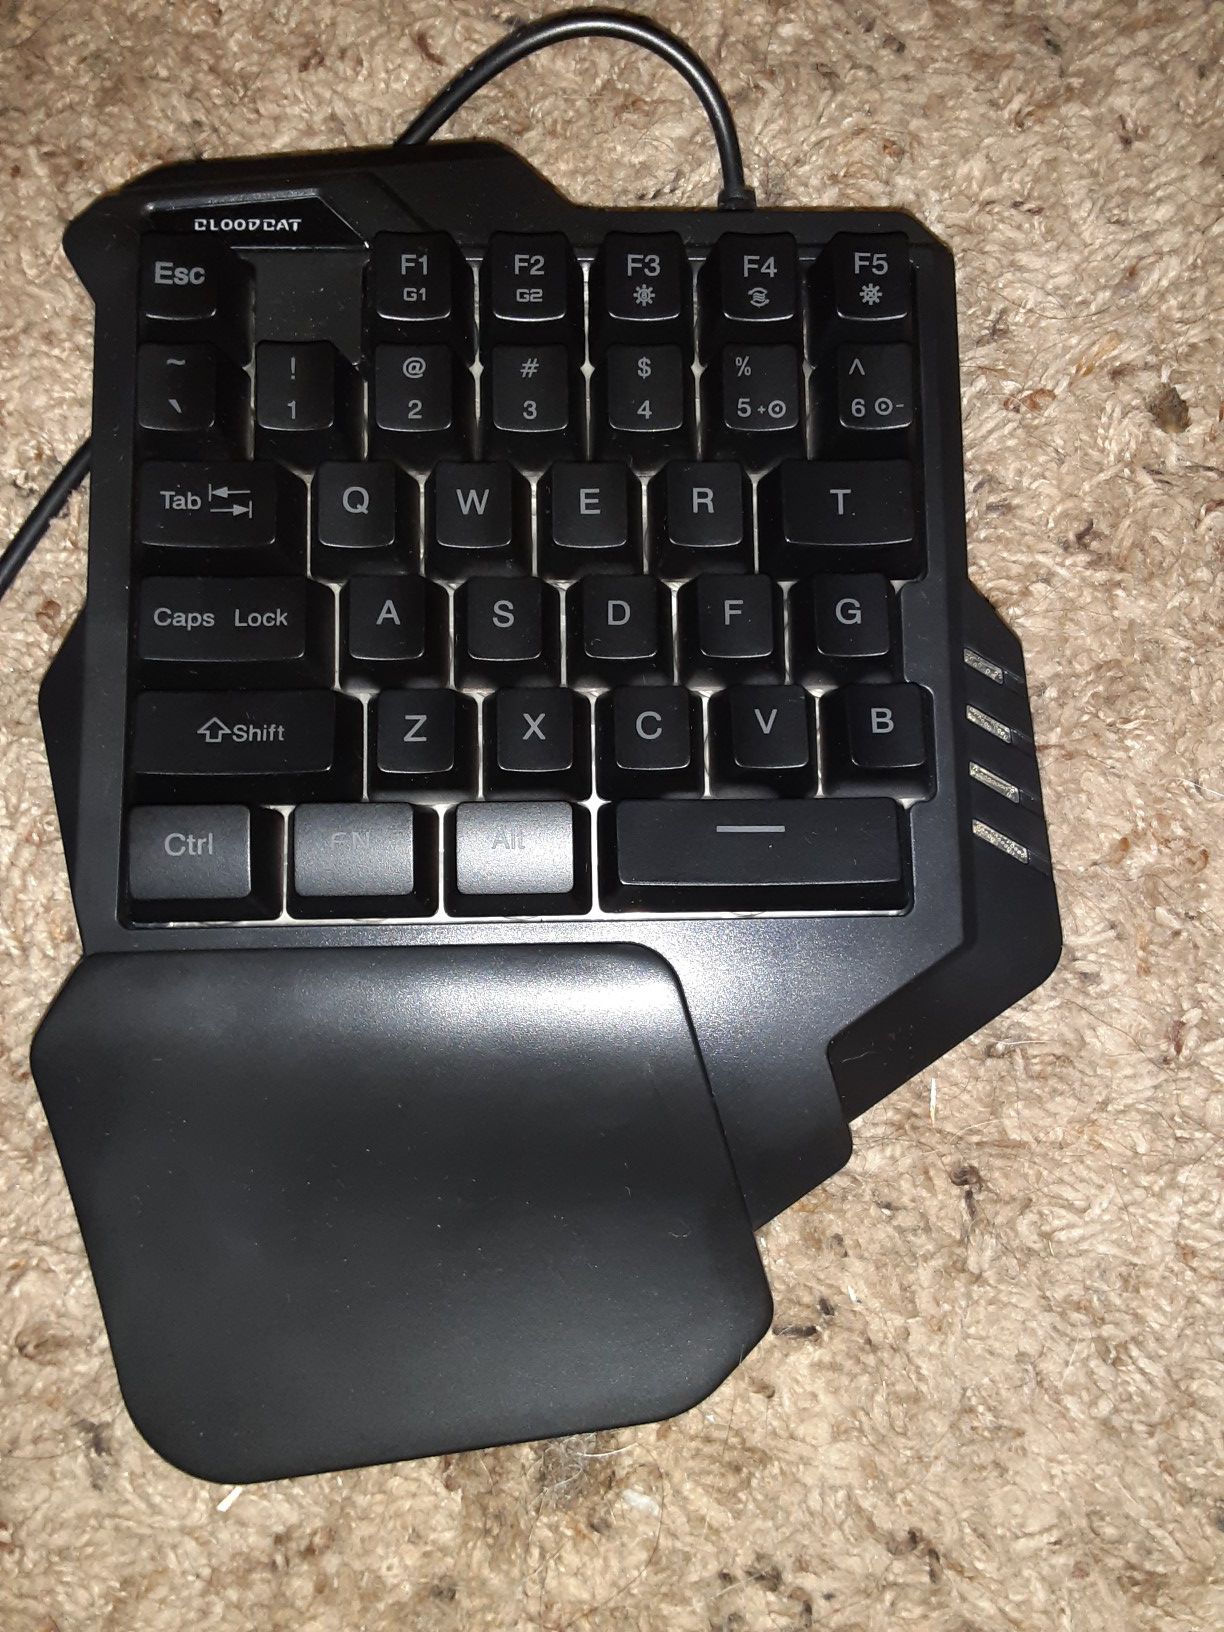 Mechanical gaming keyboard never used